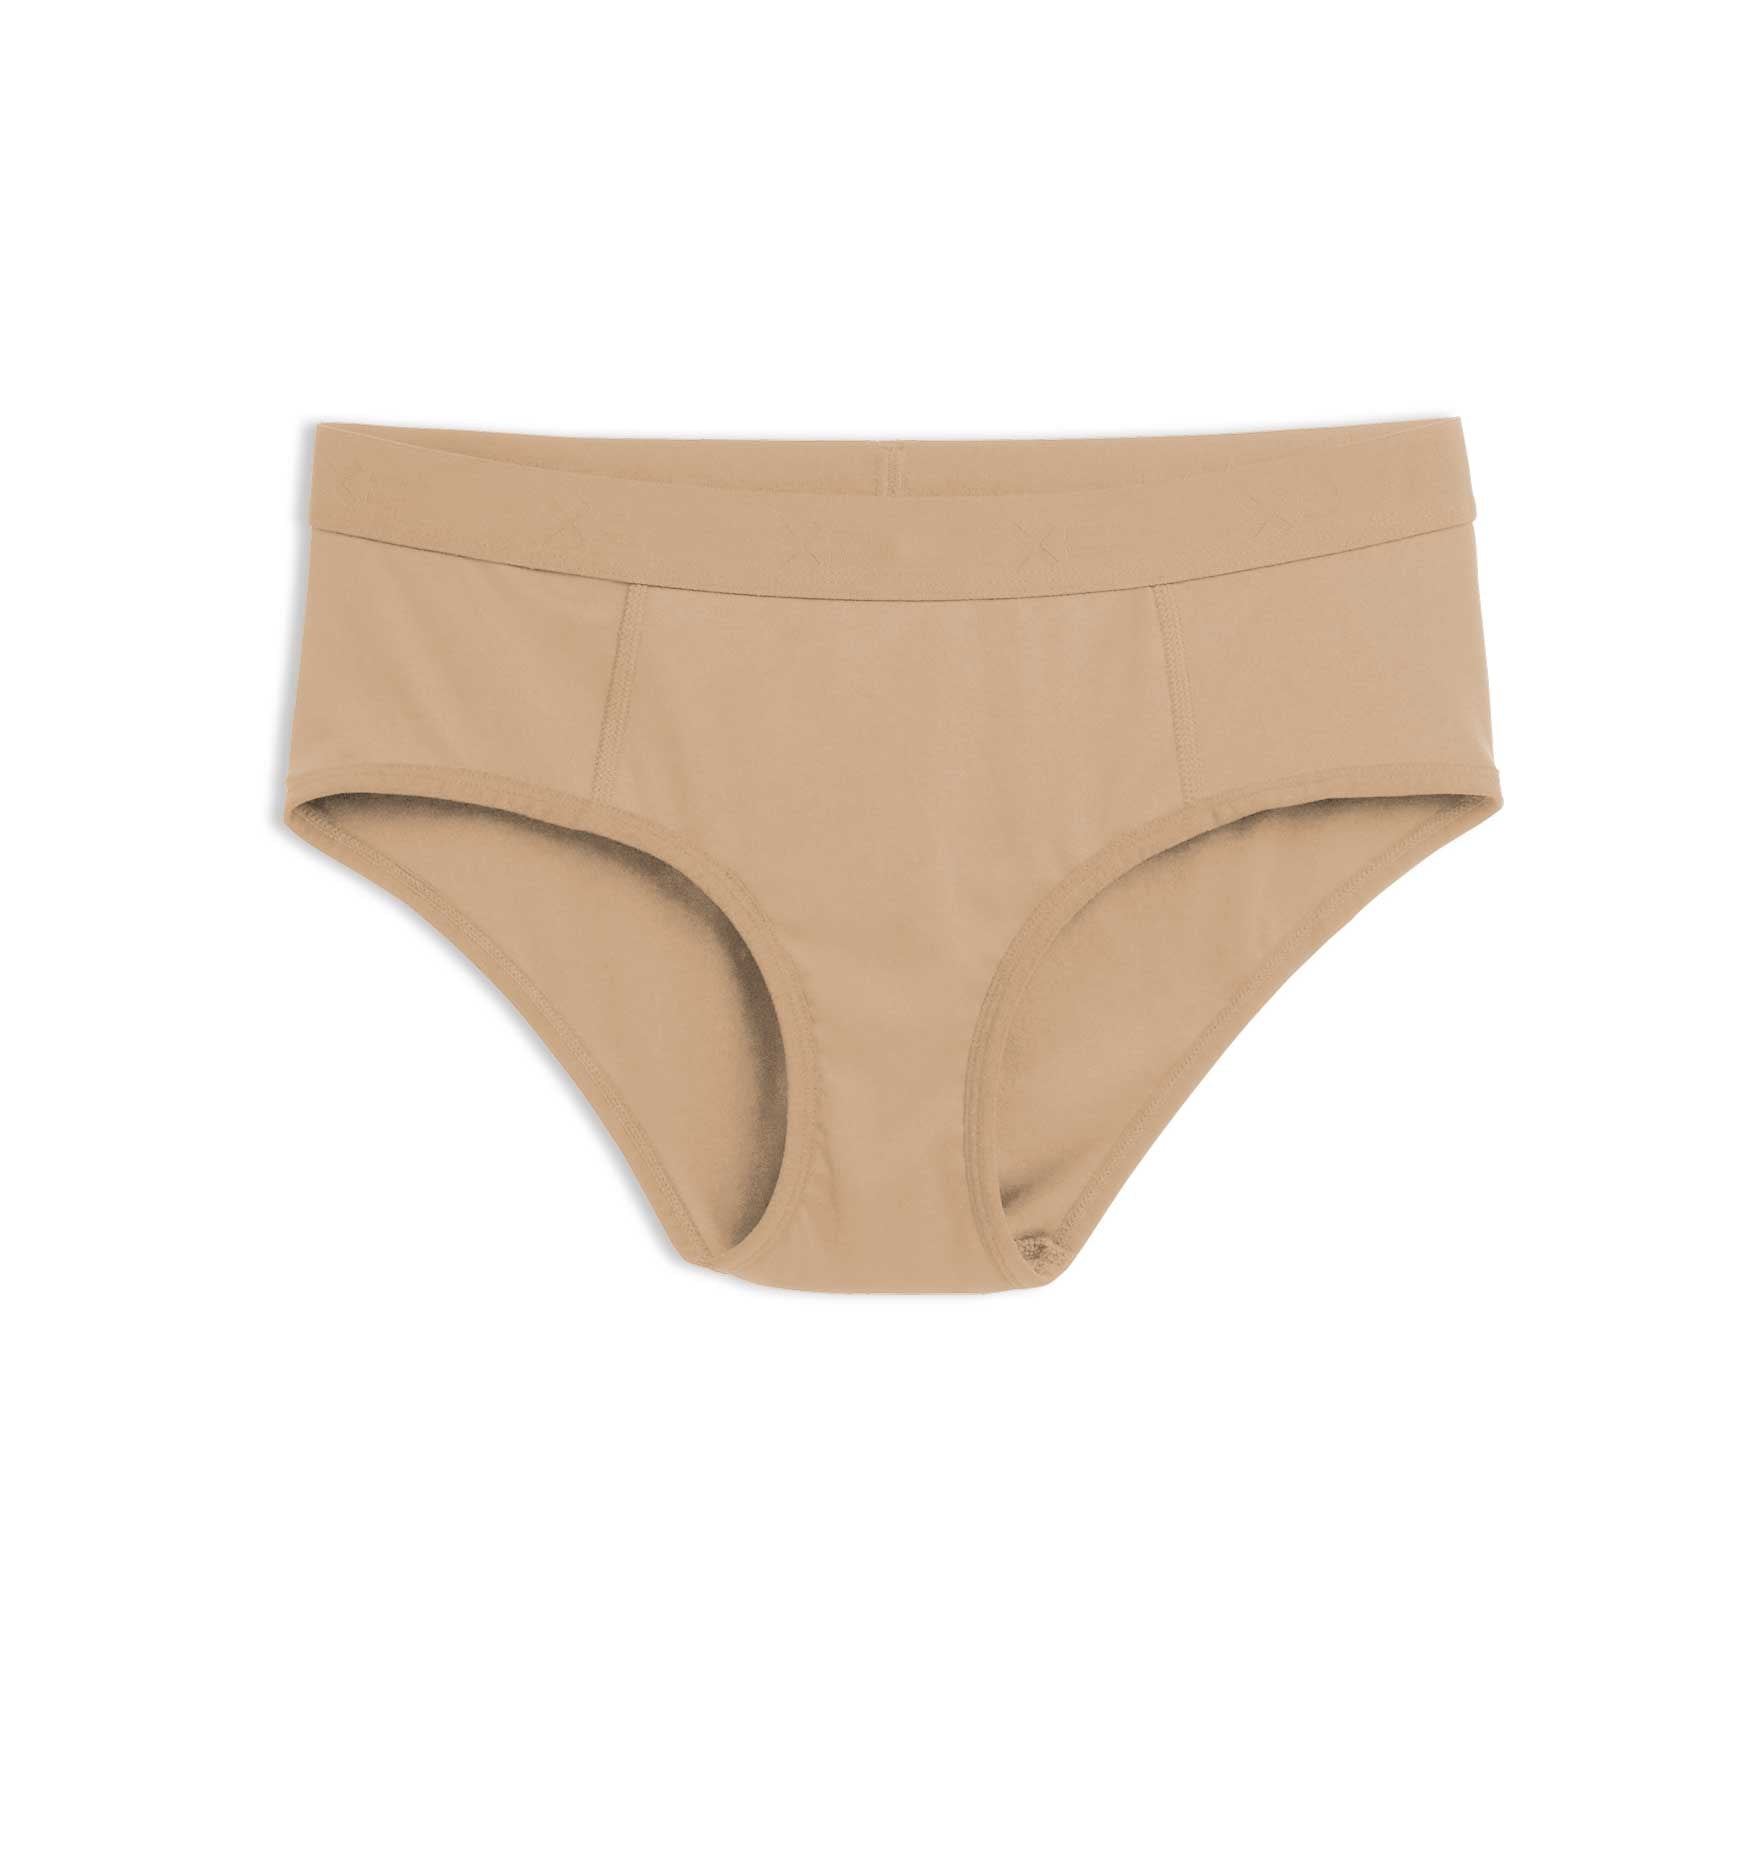 Ruoru Women Cotton Shorts Tomboy Neutral Underwear for Les Lesbian